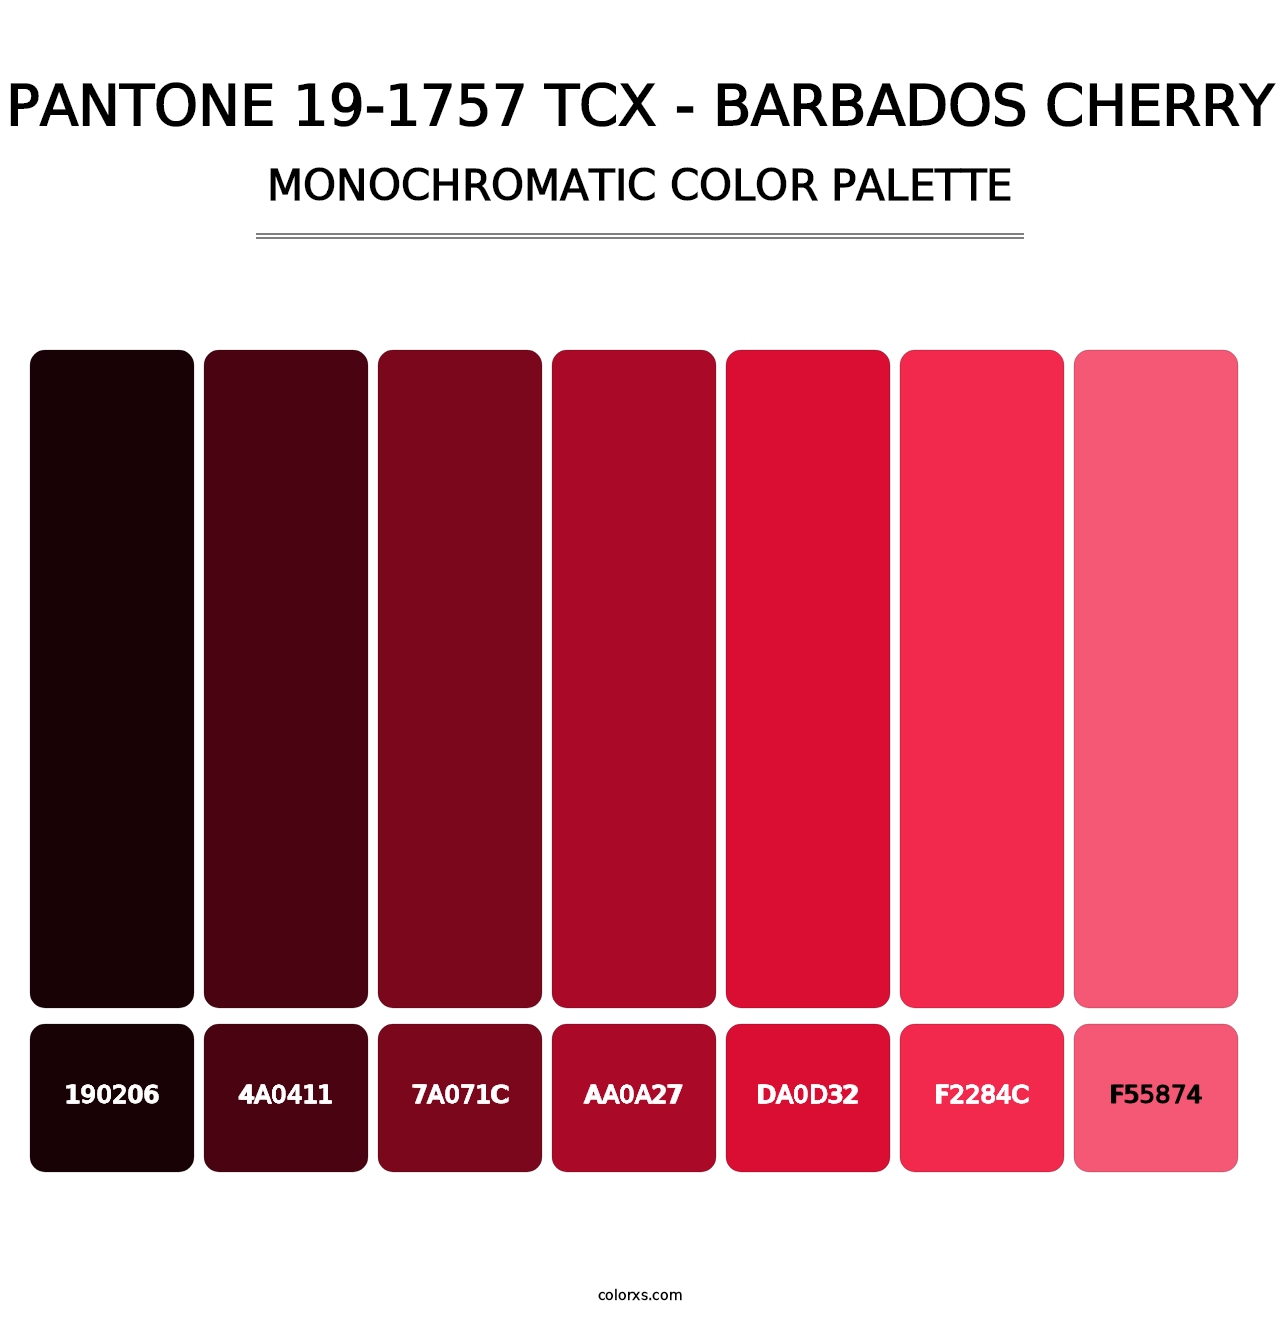 PANTONE 19-1757 TCX - Barbados Cherry - Monochromatic Color Palette